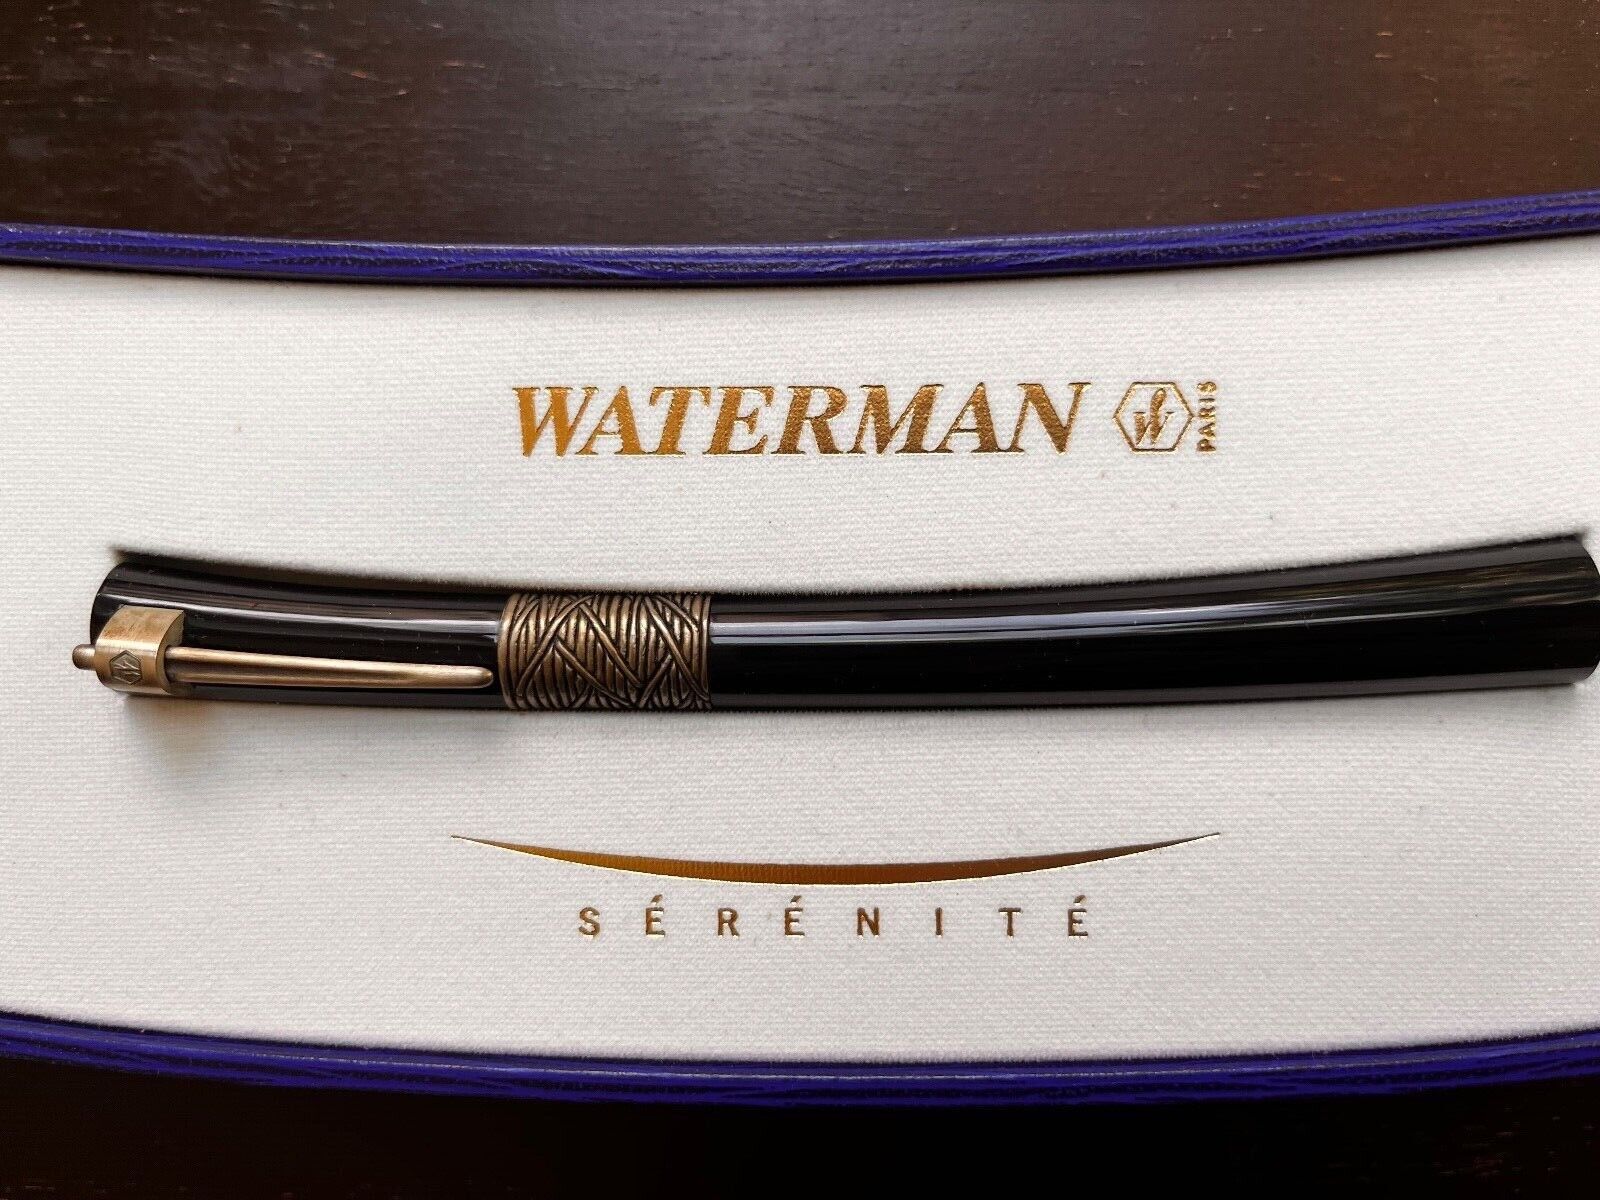 Waterman Serenite Rollerball Pen in Original Box and Package